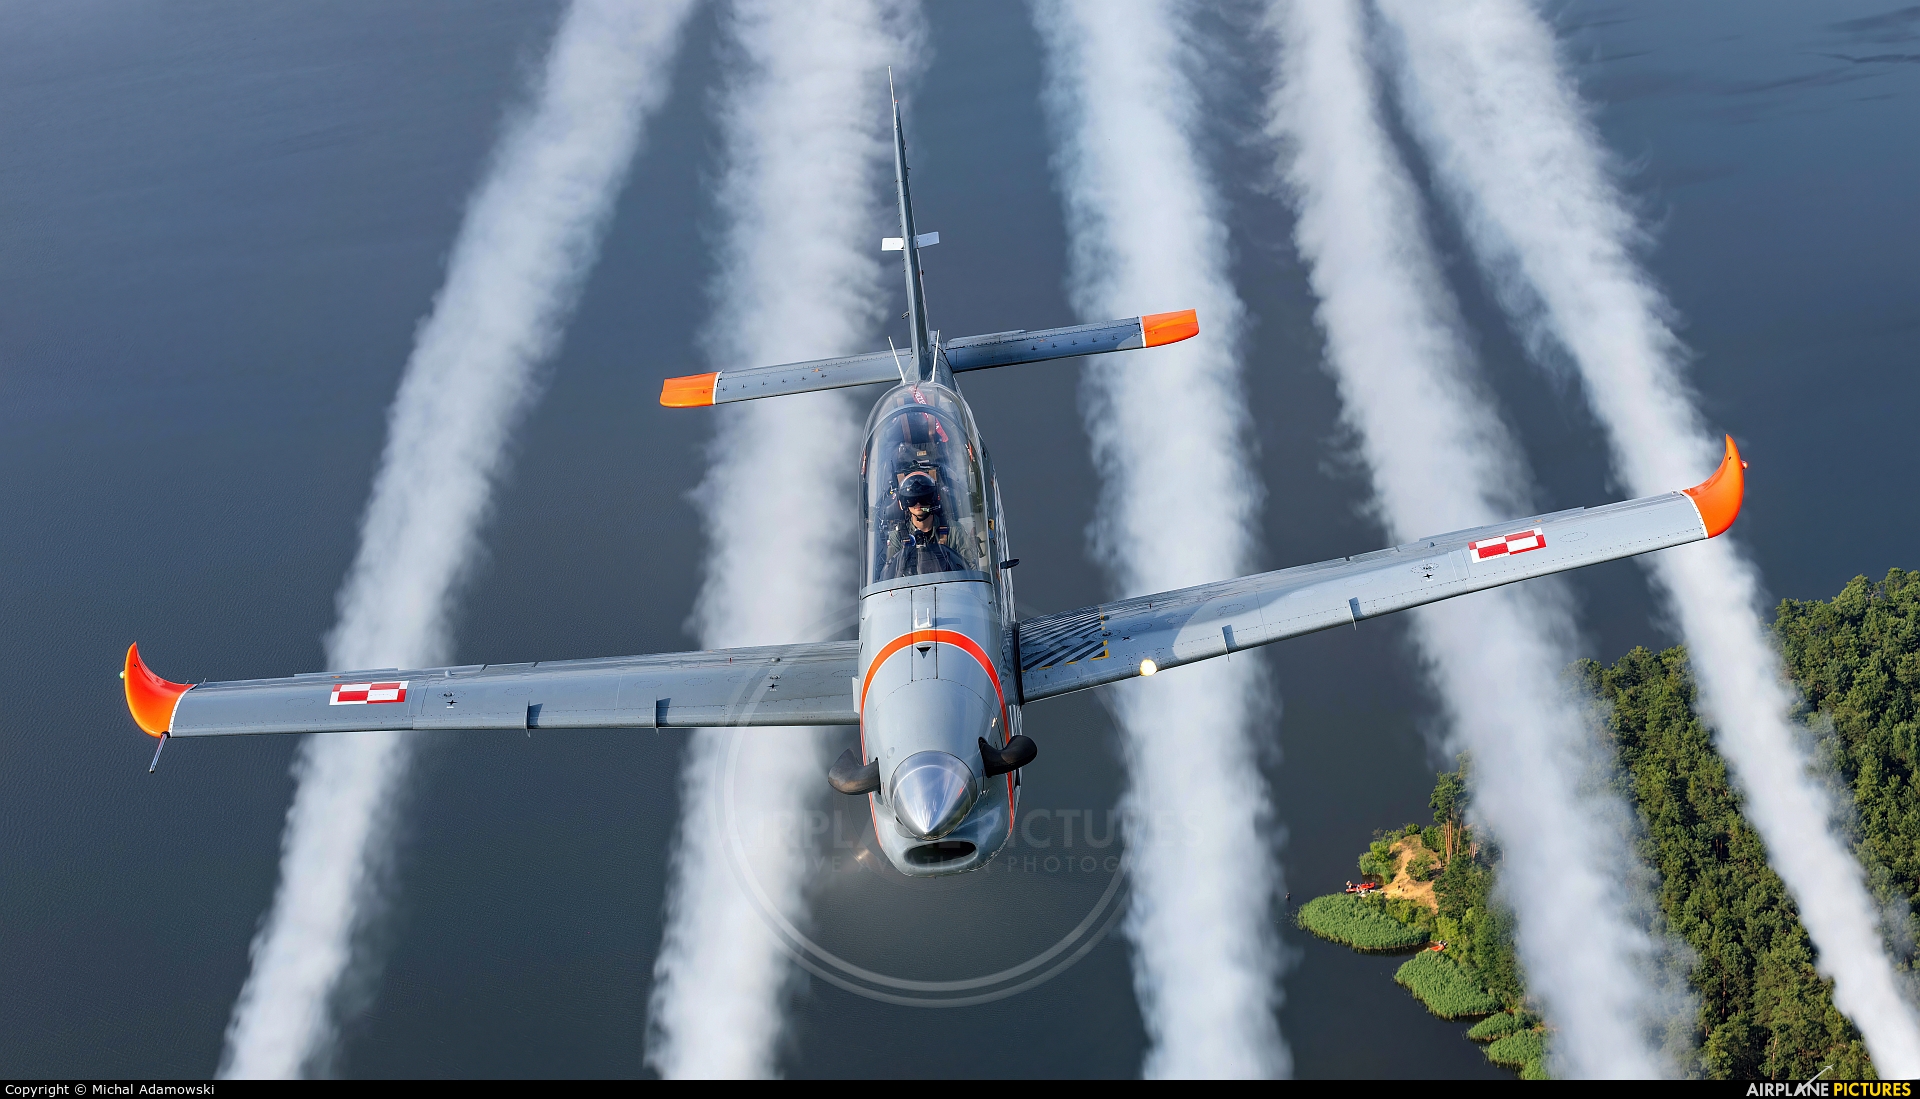 Poland - Air Force "Orlik Acrobatic Group" 043 aircraft at Off Airport - Poland